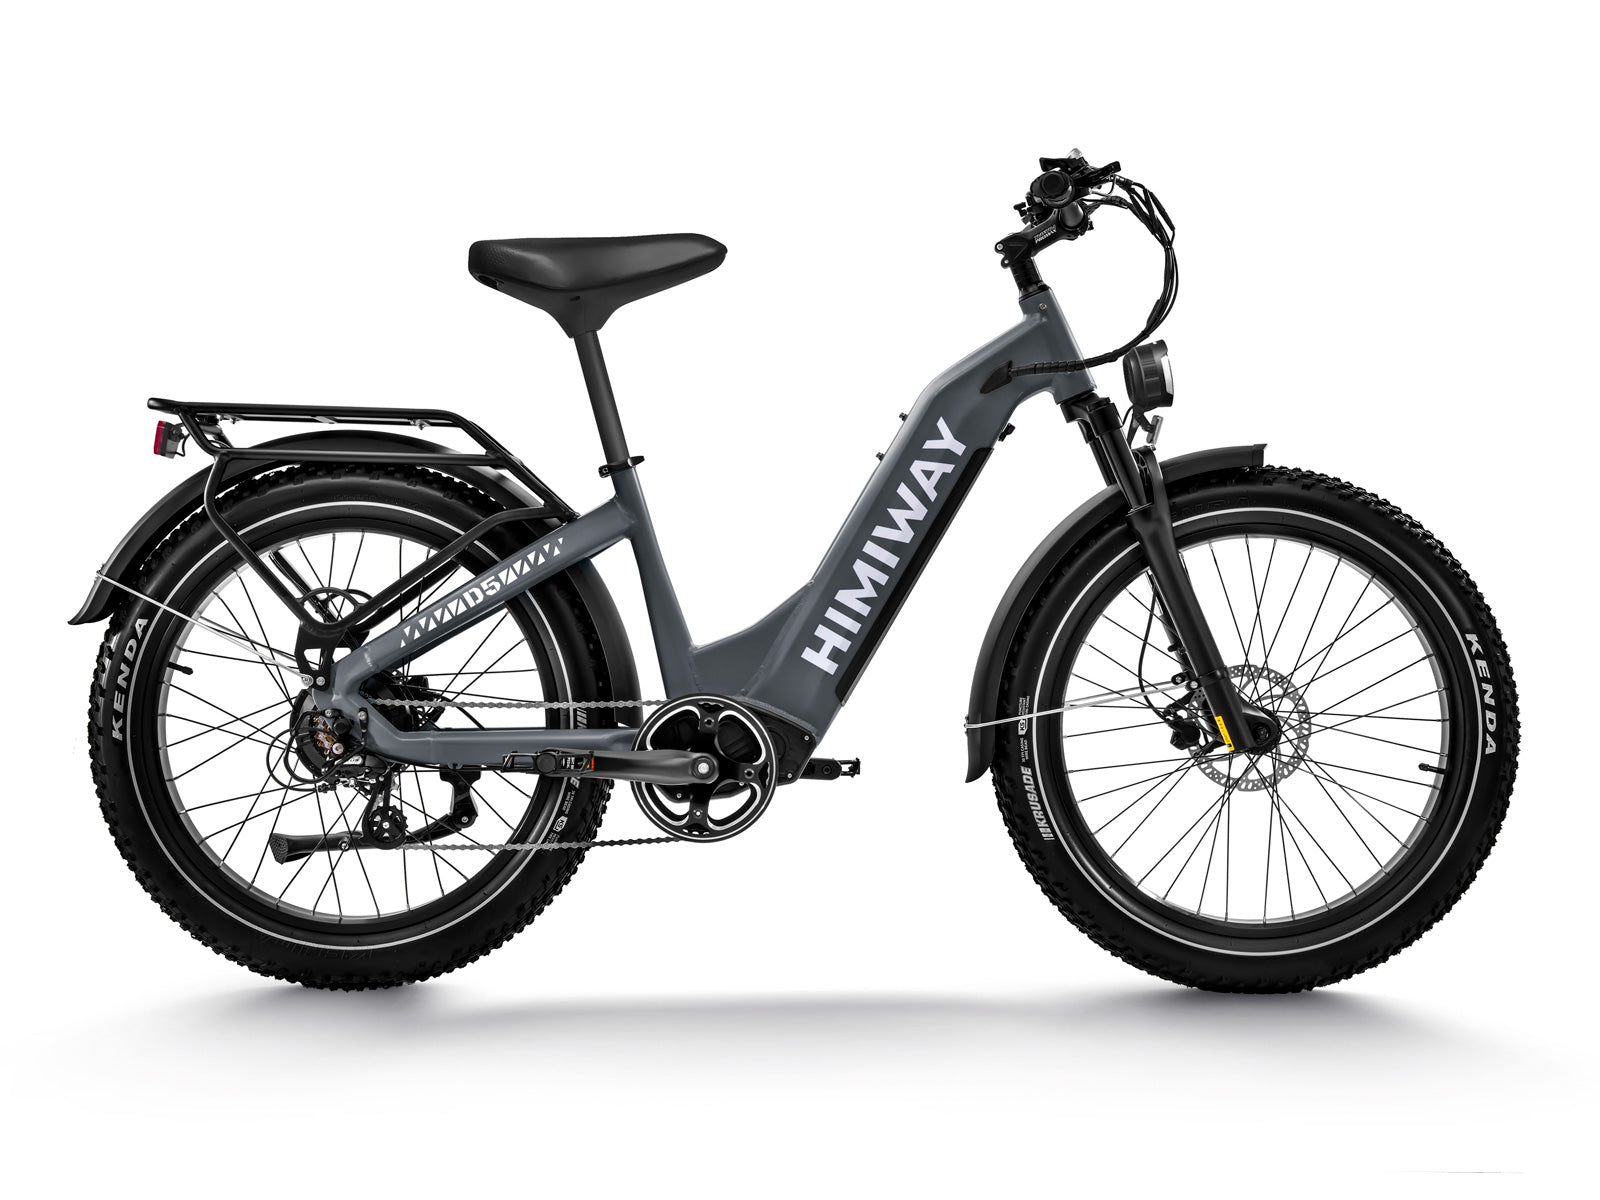 Himiway D5 ST (Zebra ST) | Premium All-terrain Electric Fat Bike